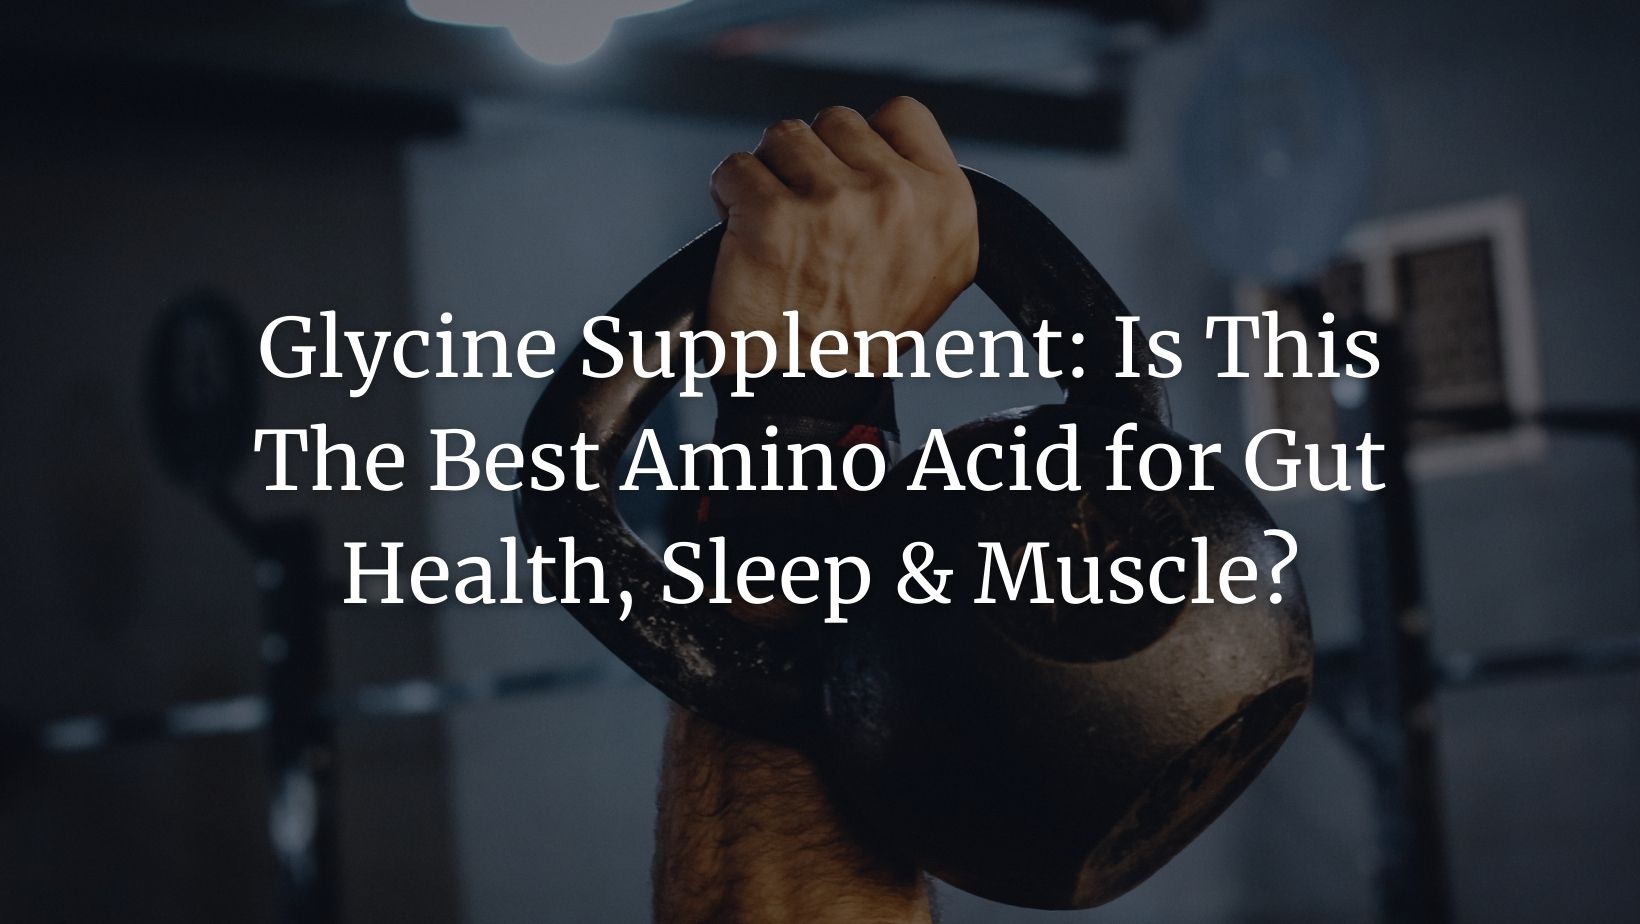 Glycine supplement featured image